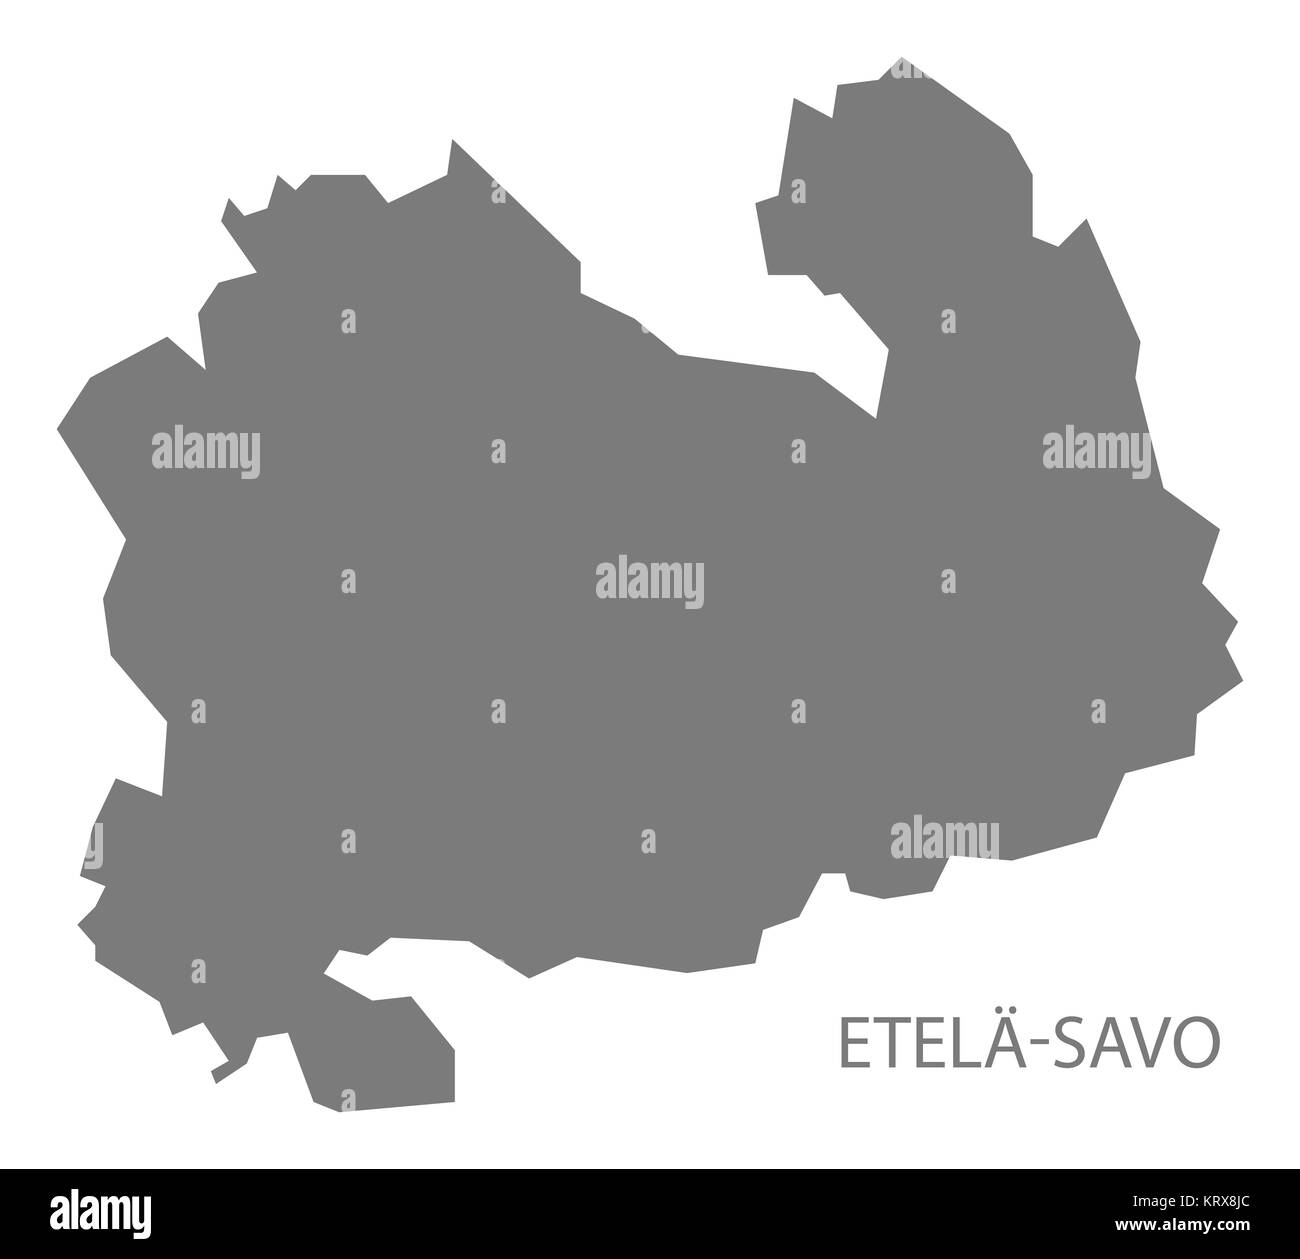 Etela-Savo Finland Map grey Stock Photo